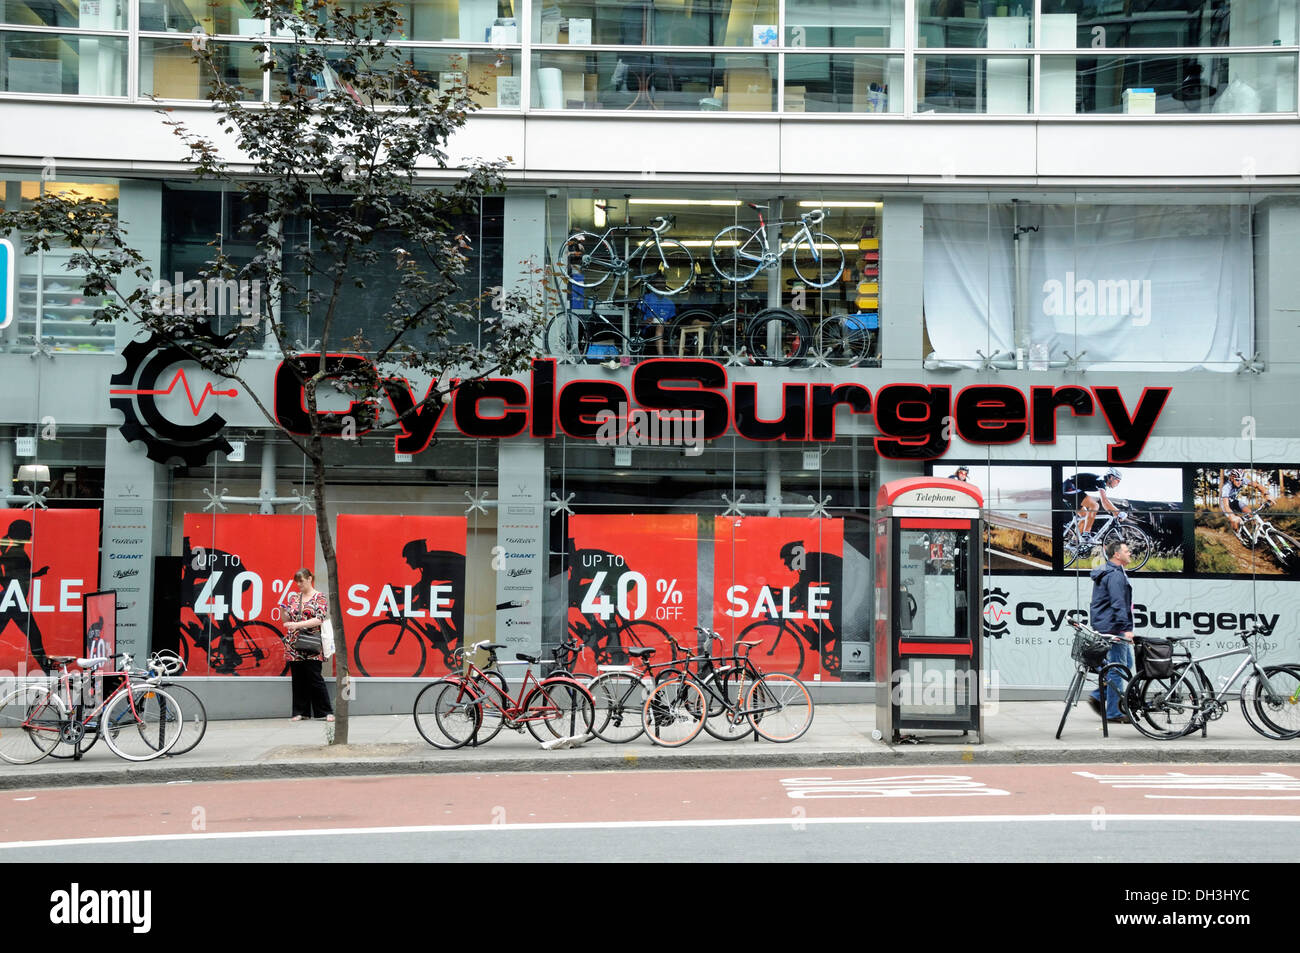 La chirurgie, cycle bike shop Holborn, London England UK Banque D'Images